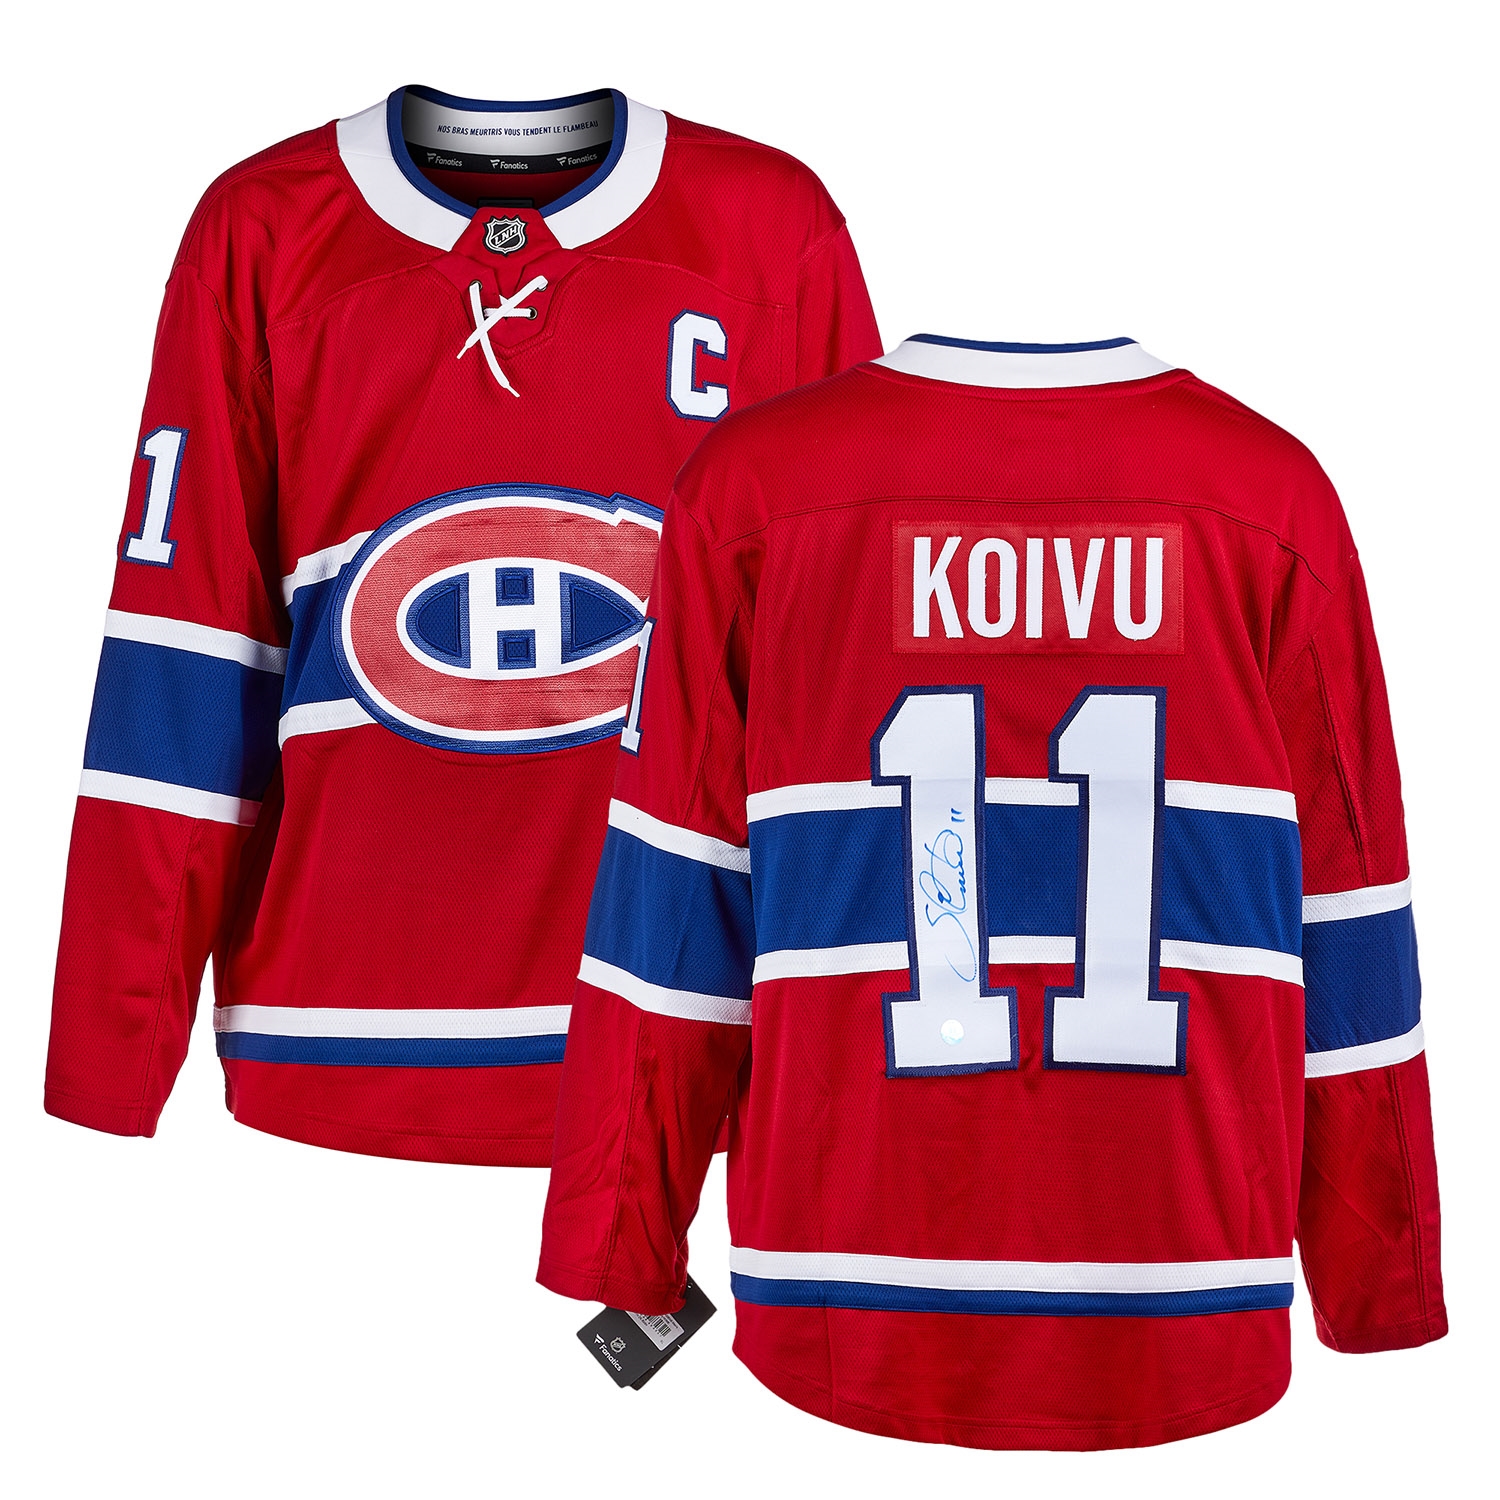 Saku Koivu Montreal Canadiens Autographed Fanatics Jersey